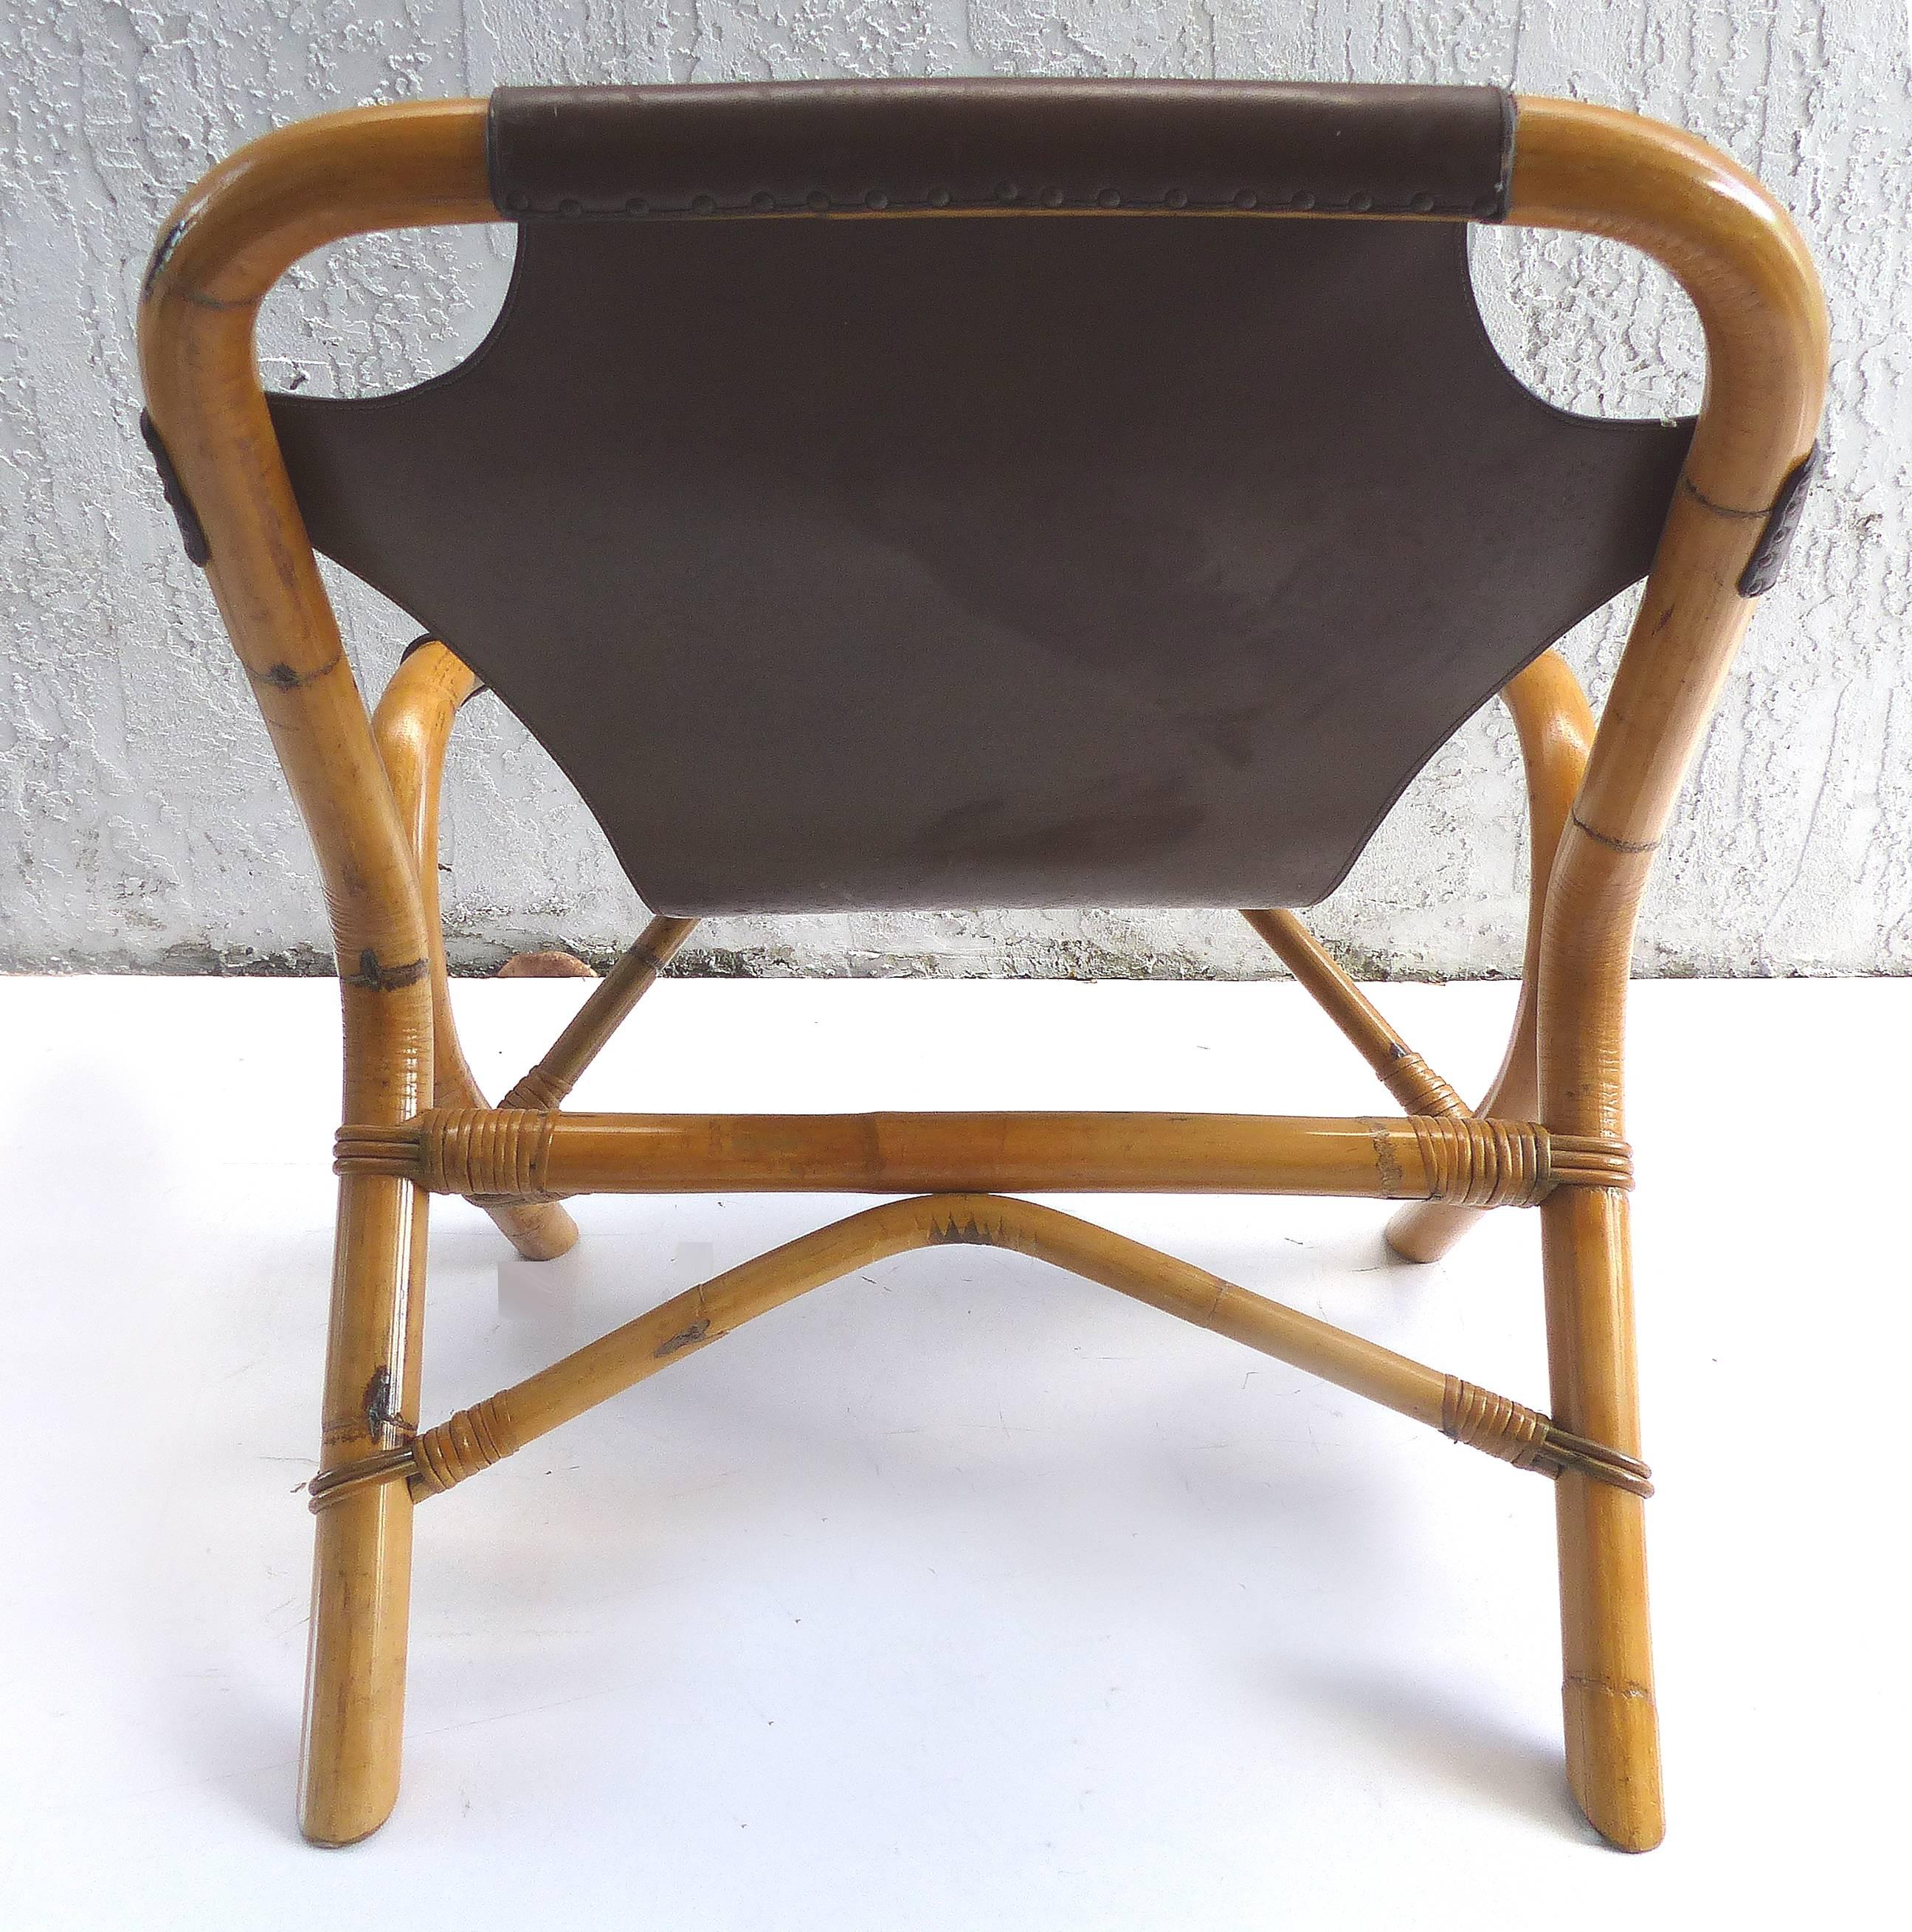 Mid-20th Century Pair of 1950s Italian Rattan and Leather Chairs by Pierantonio Bonacina